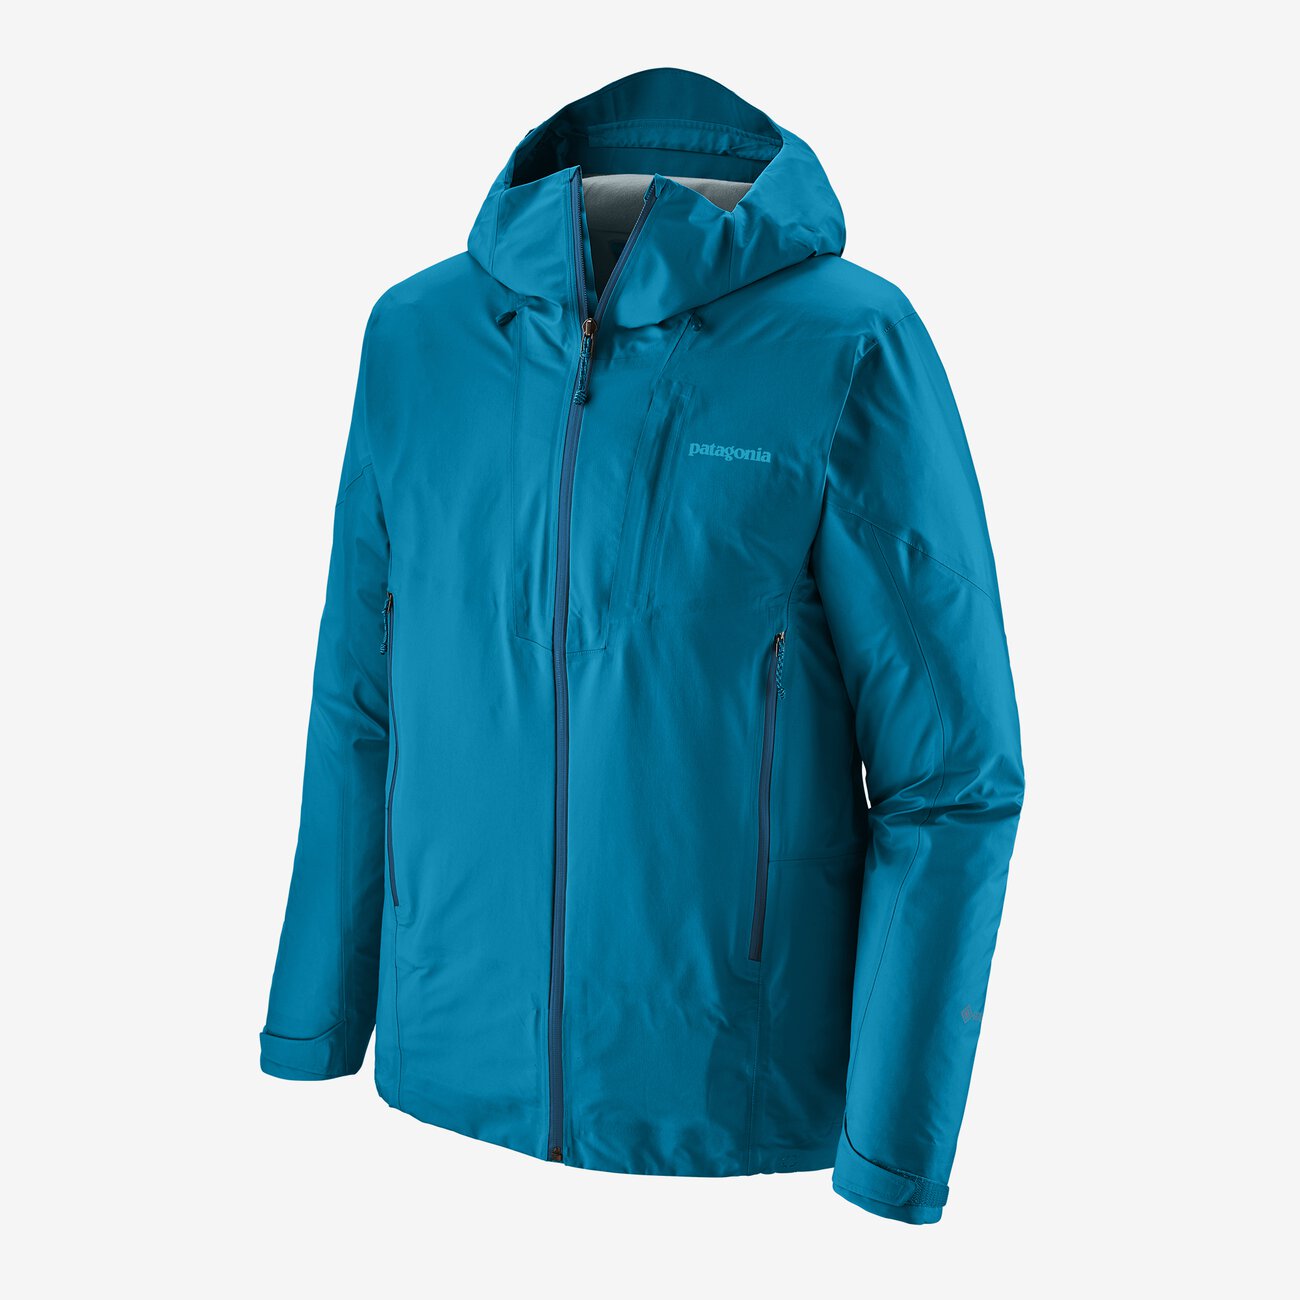 Patagonia Men's Ascensionist Alpine Jacket